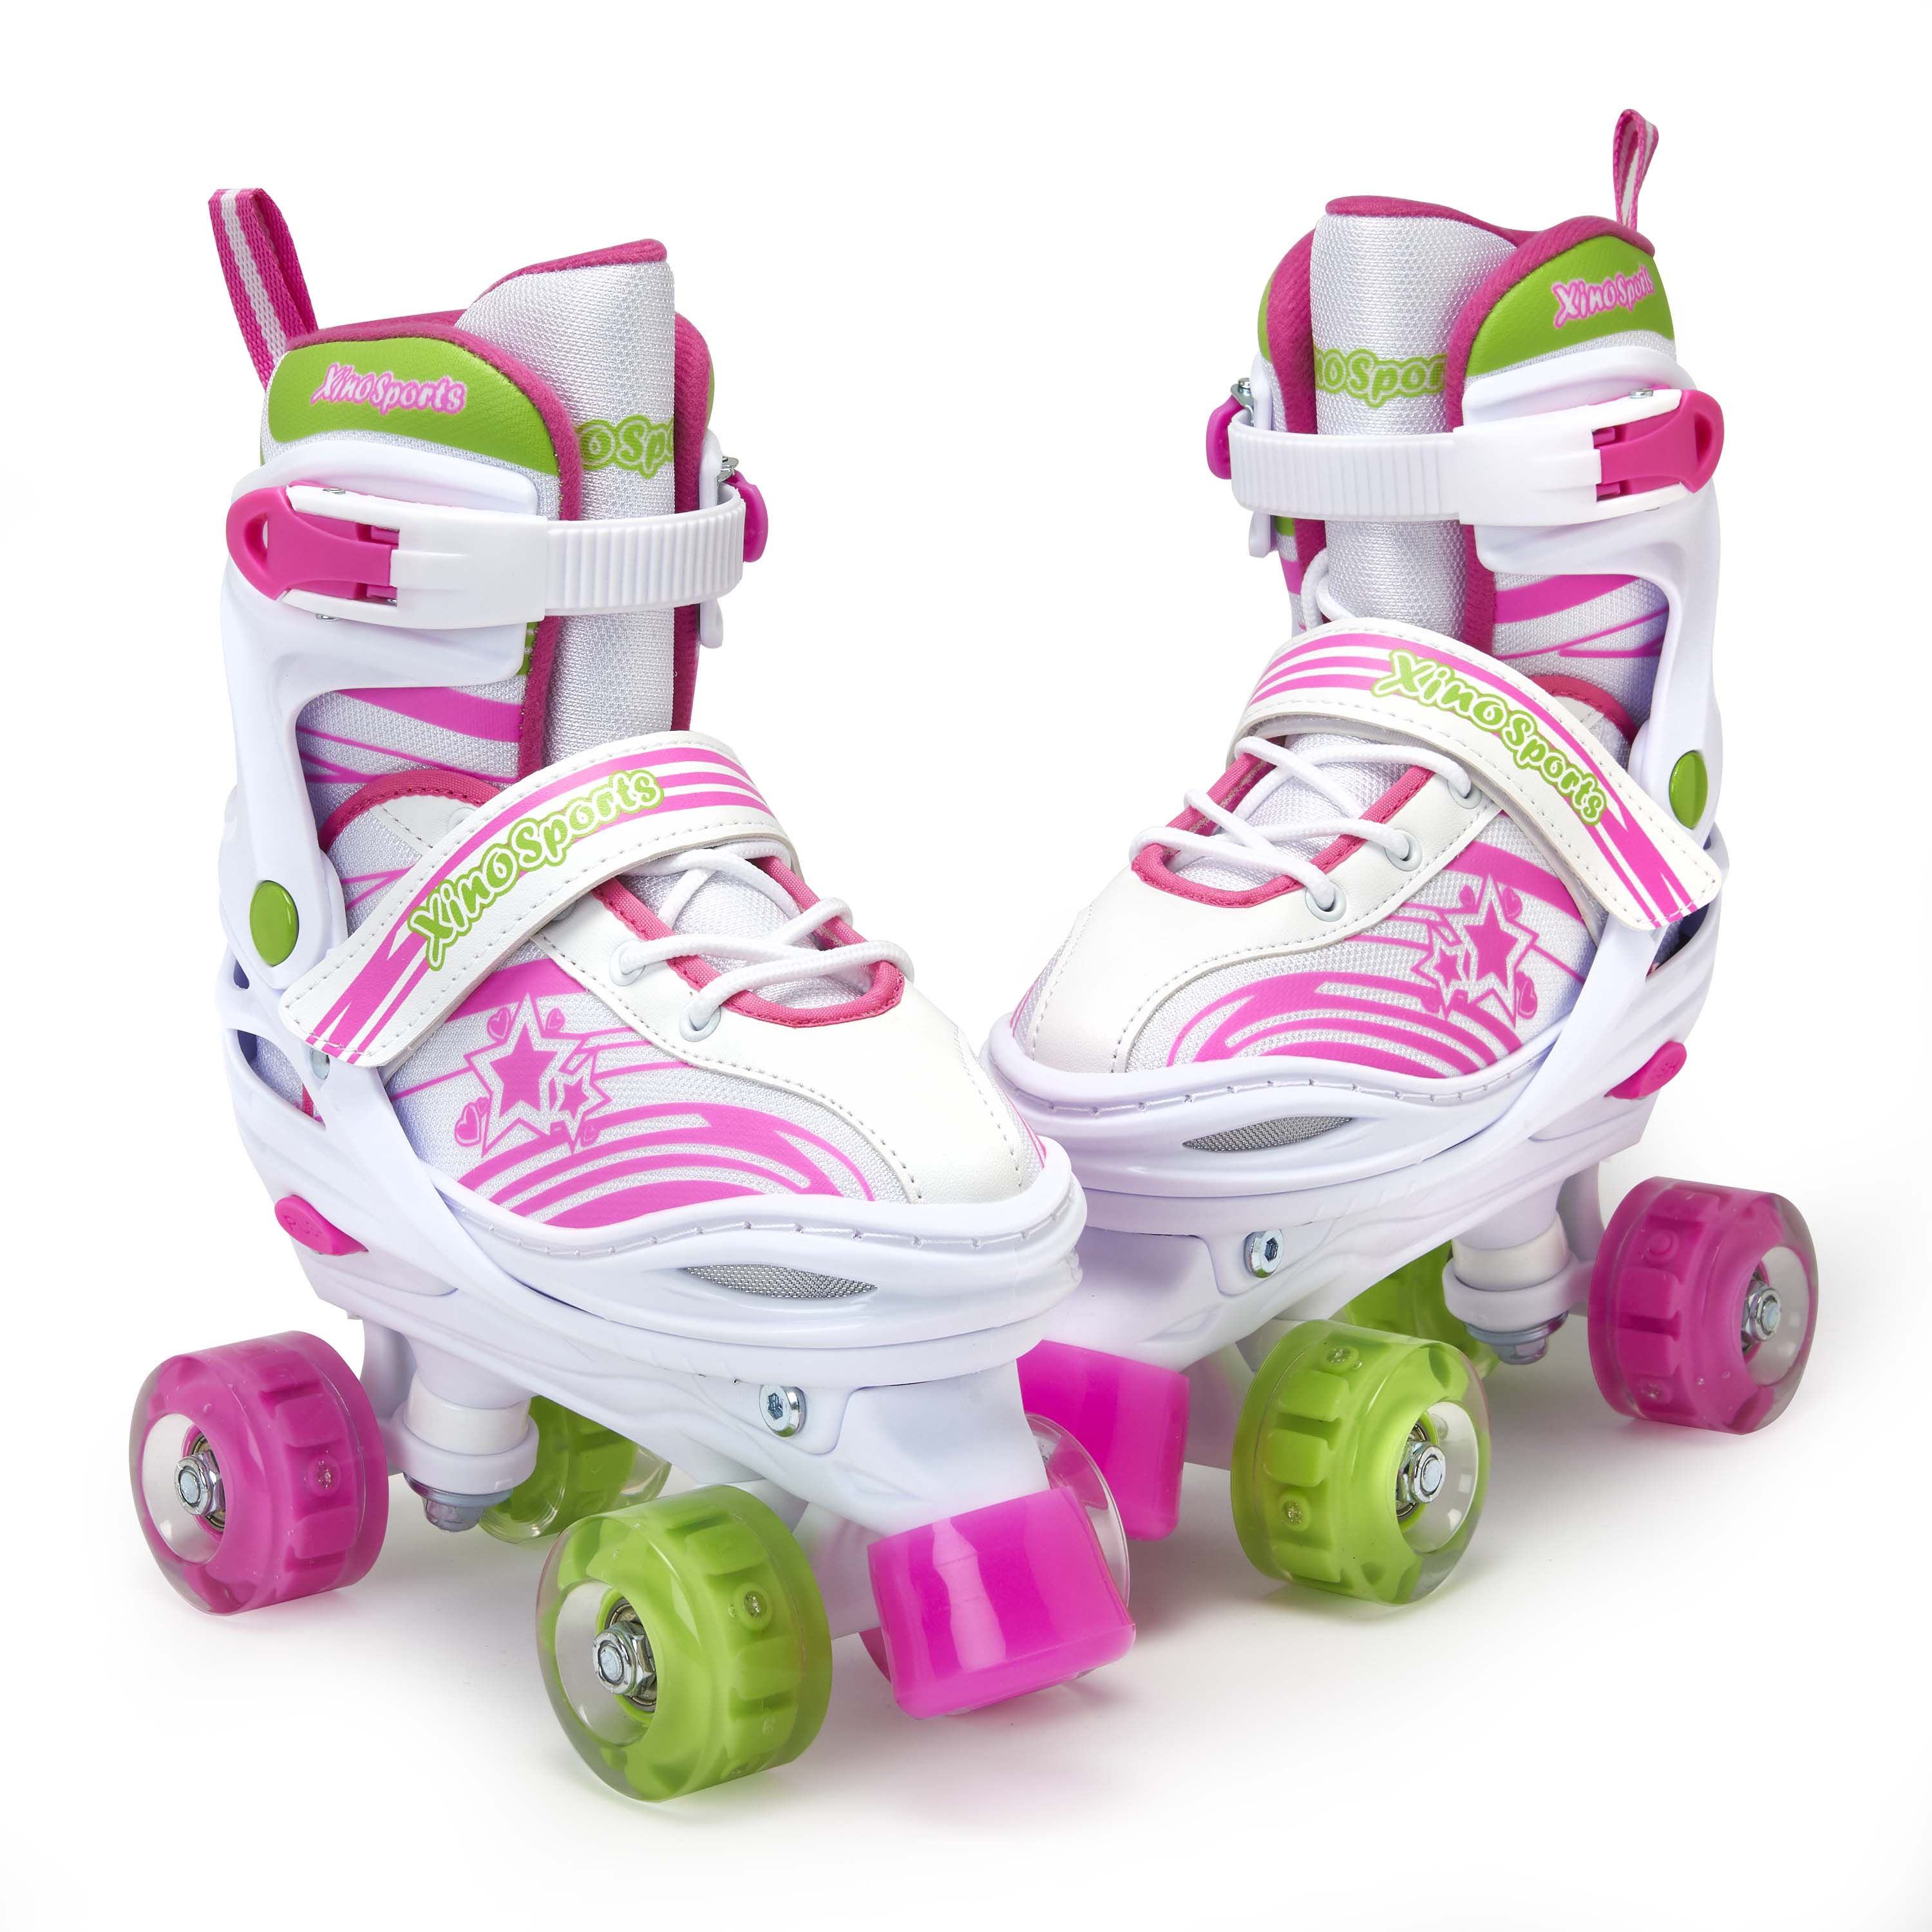 Light-up Roller Skates for Kids - Xino Sports